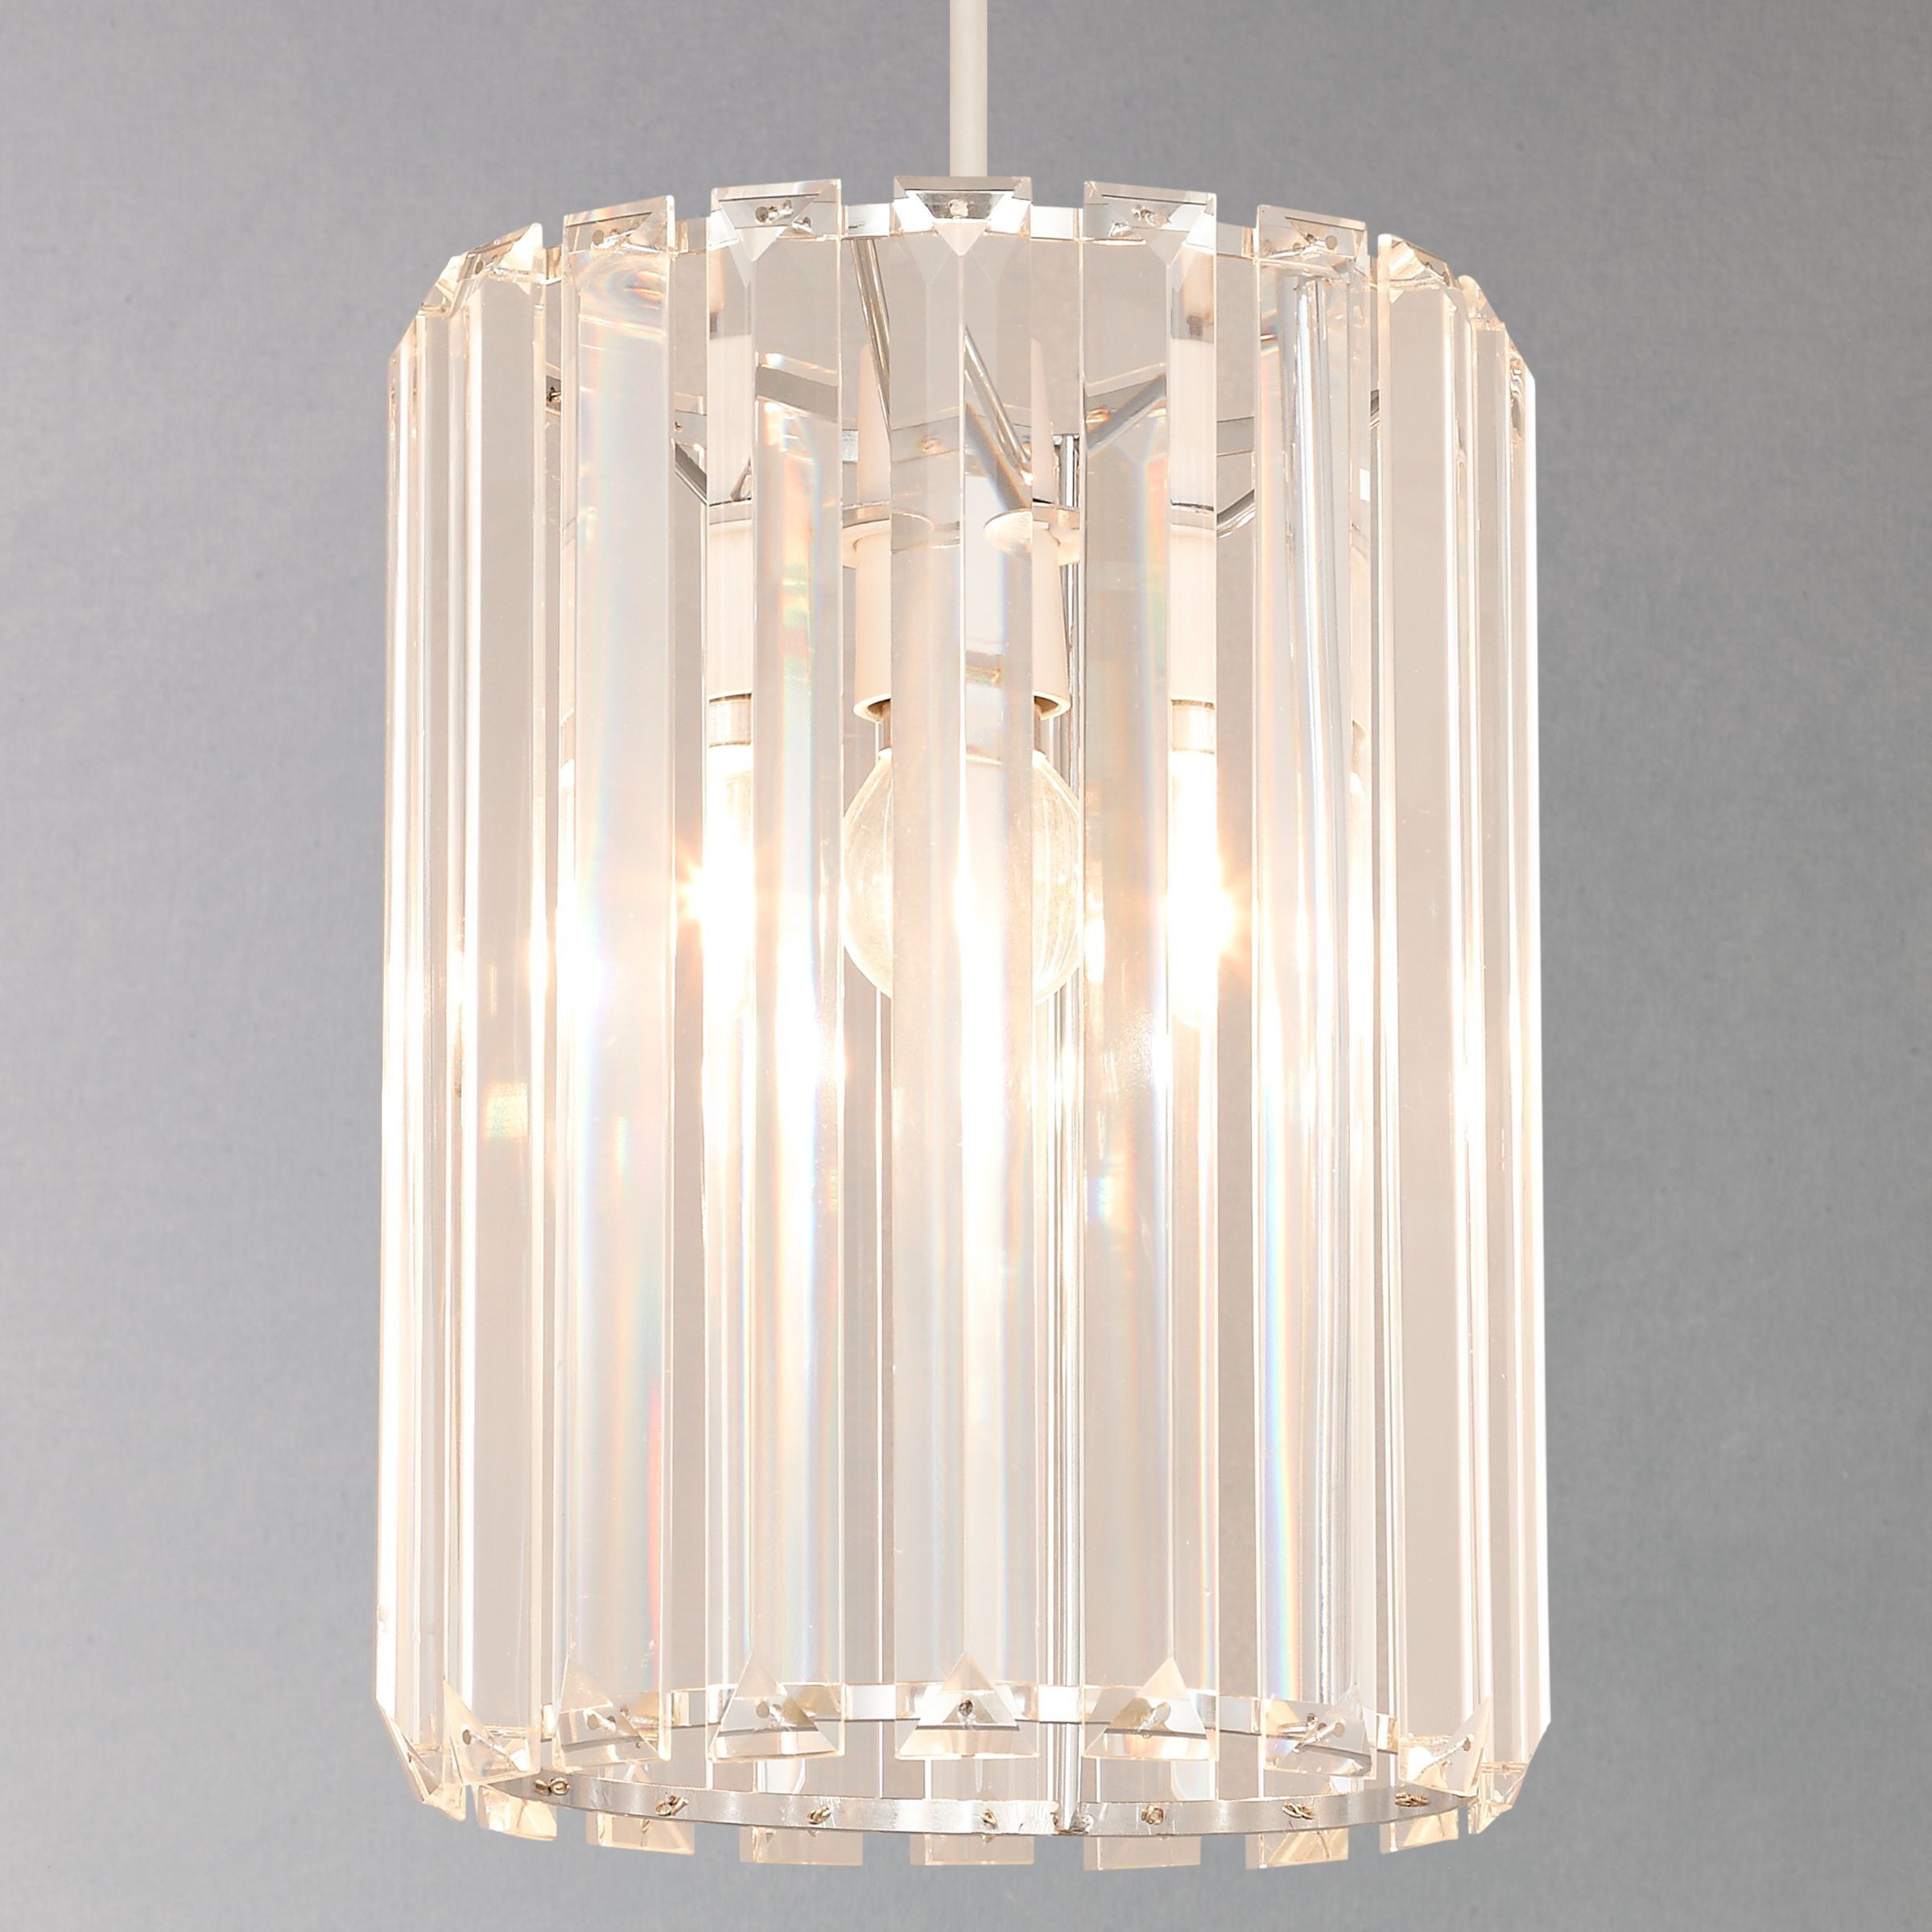 John Lewis Frieda Easy-to-Fit Crystal Ceiling Shade - image 1